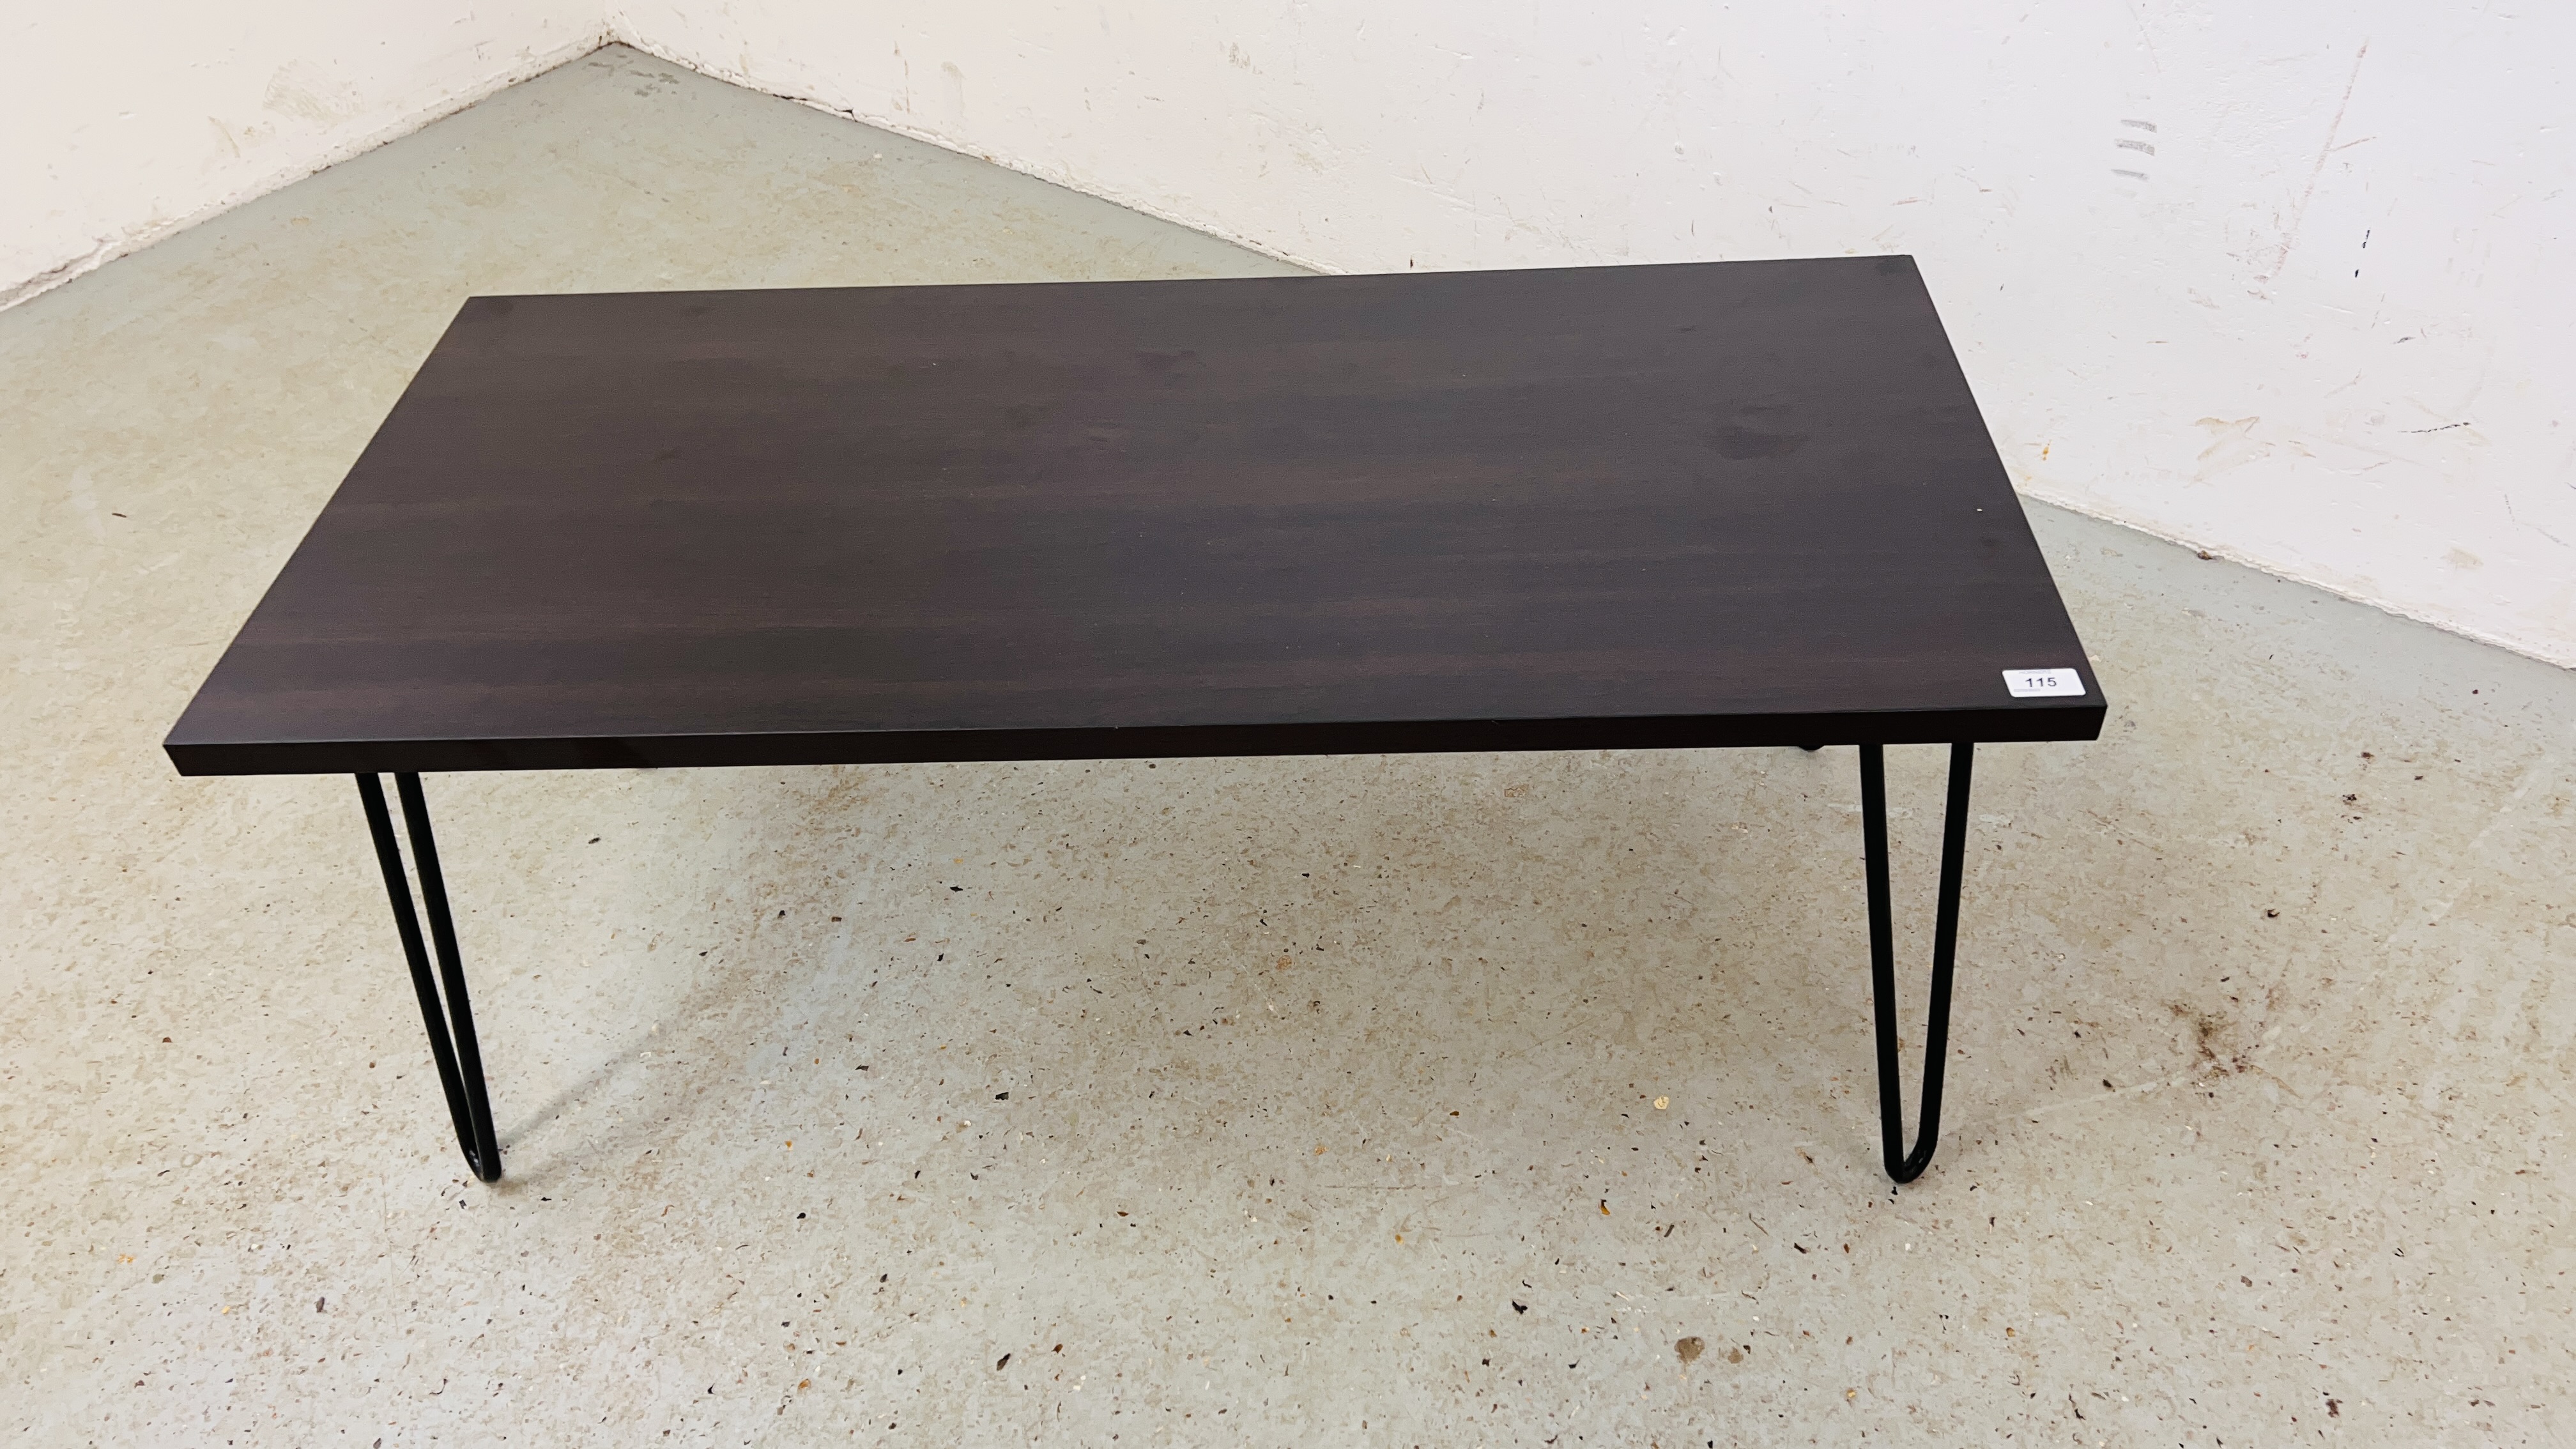 A MODERN RECTANGULAR COFFEE TABLE ON METAL U LEGS - Image 2 of 8